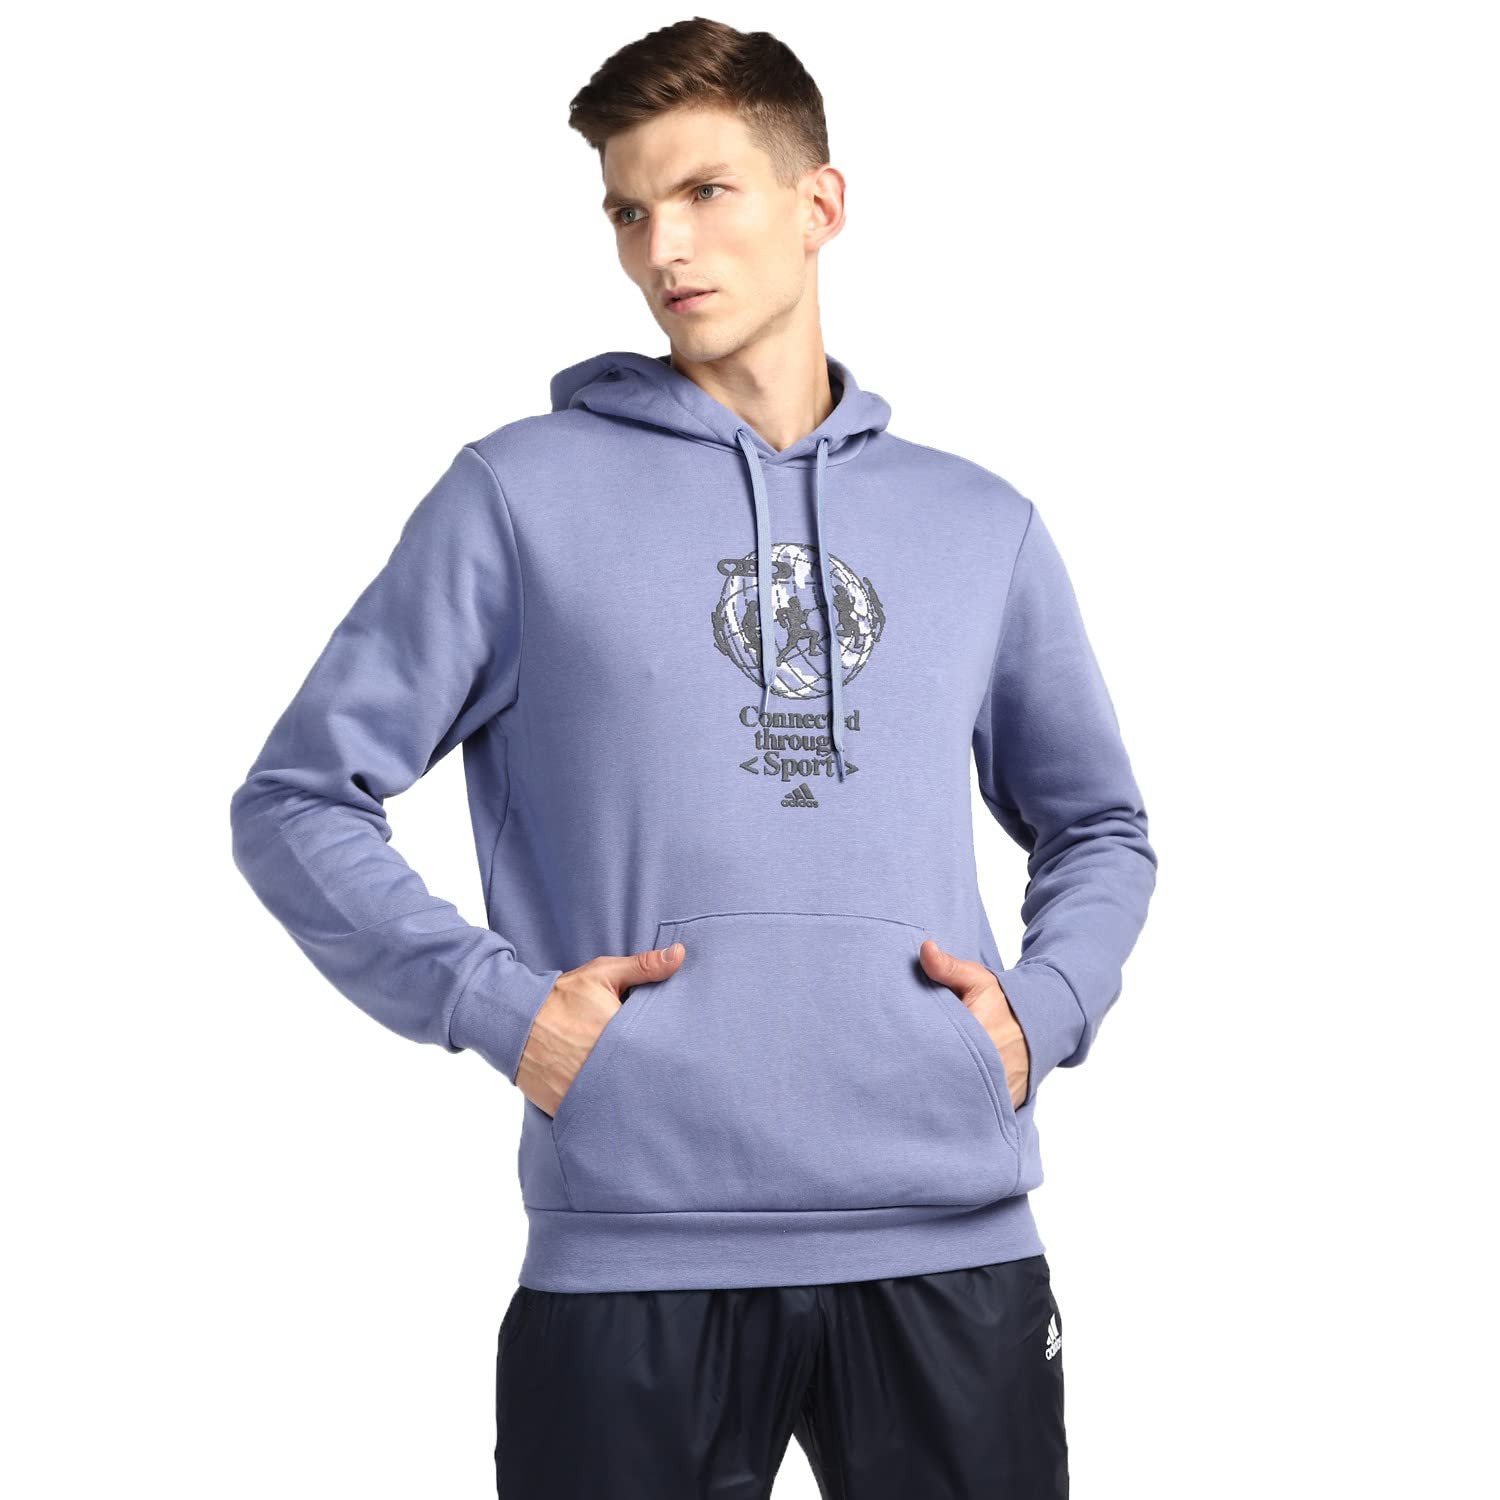 ADIDAS Full Sleeve Graphic Print Men Sweatshirt